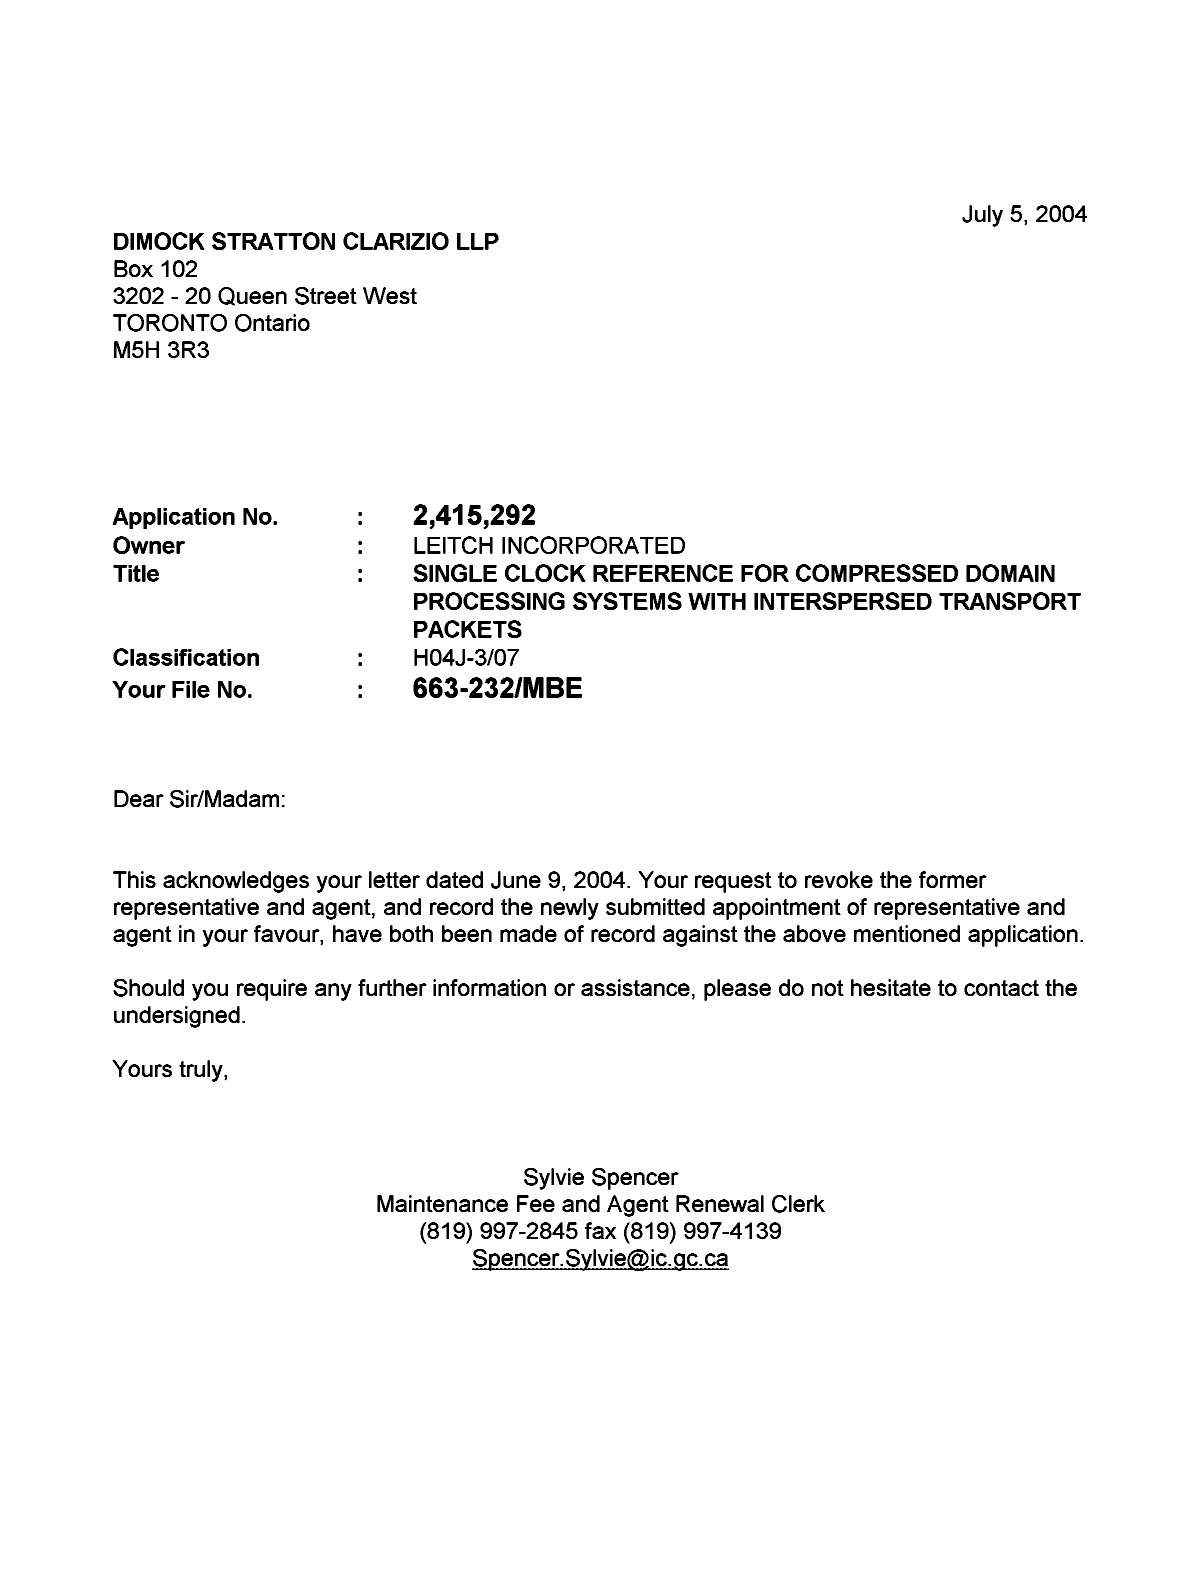 Canadian Patent Document 2415292. Correspondence 20040705. Image 1 of 1